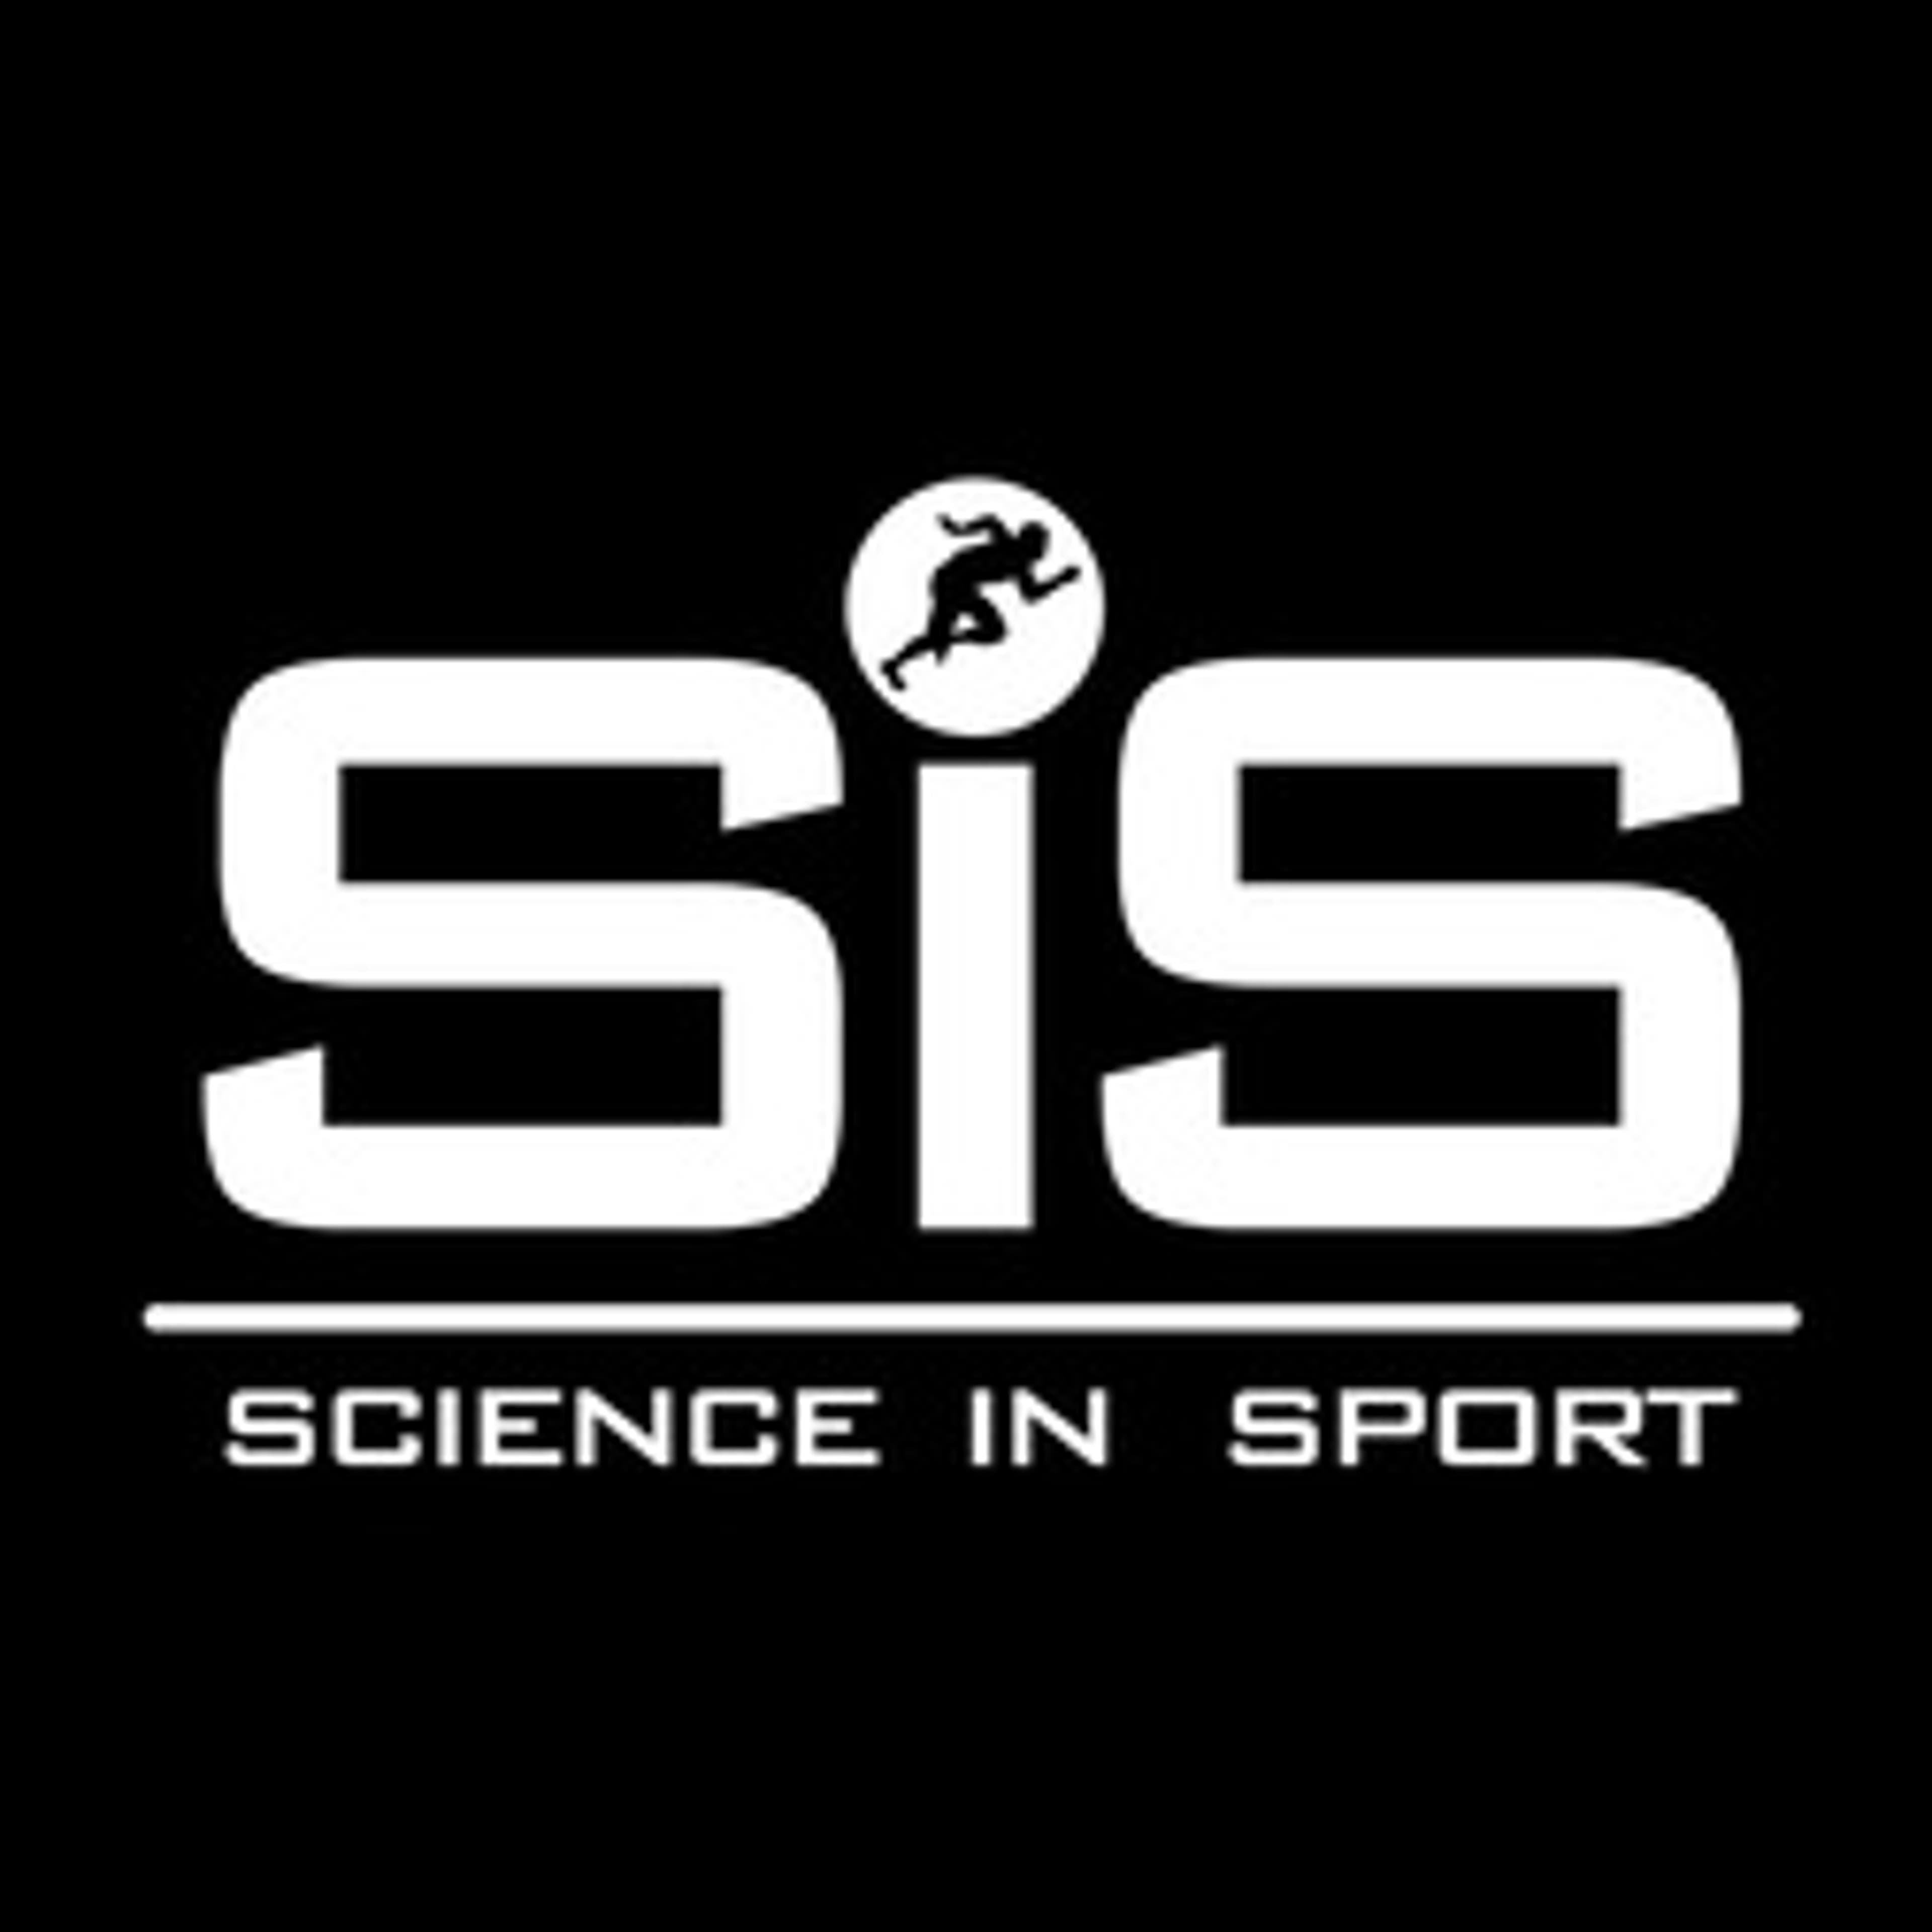  Science in Sport 